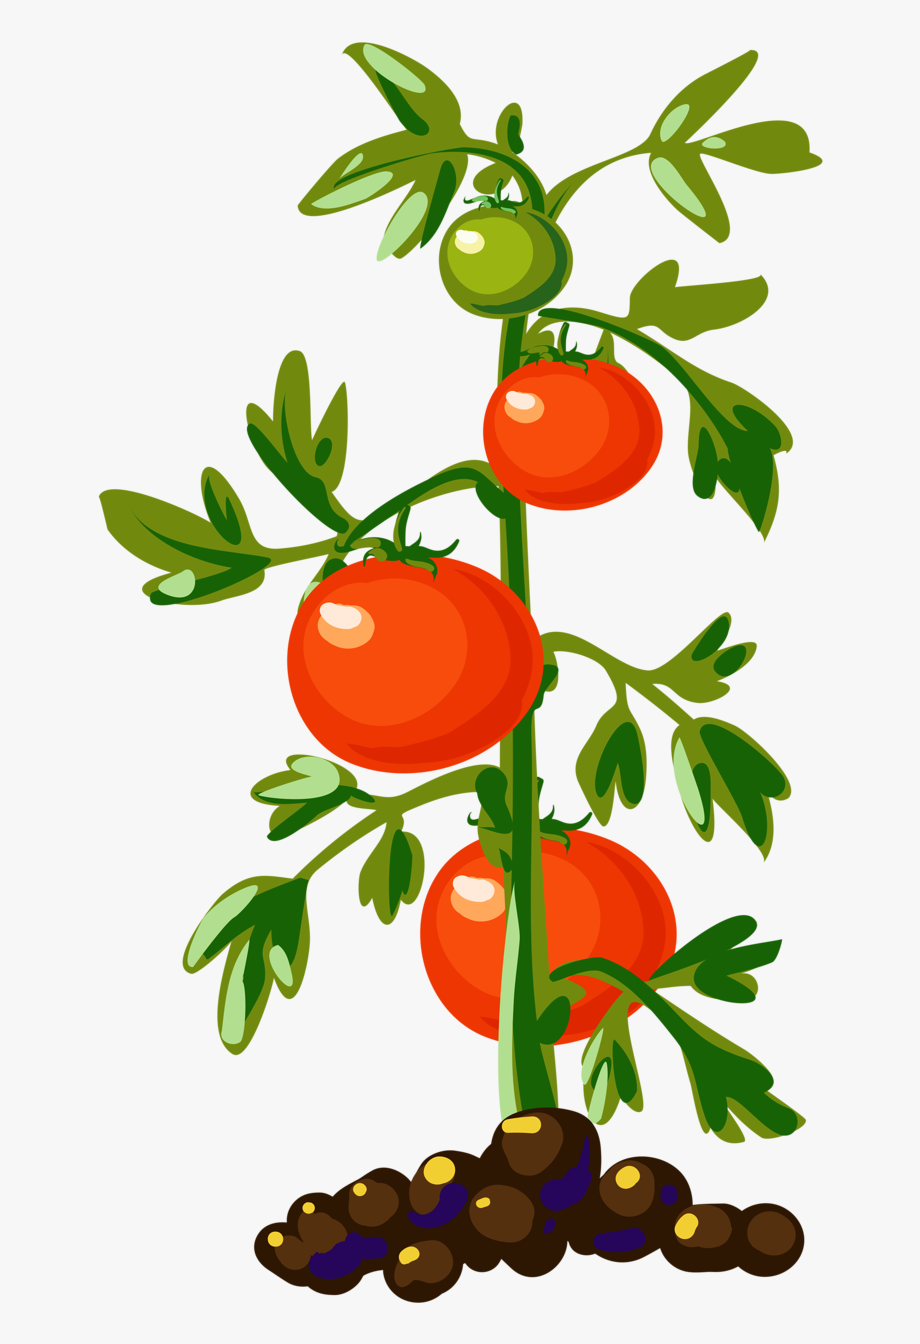 Plant vegetable tomato.